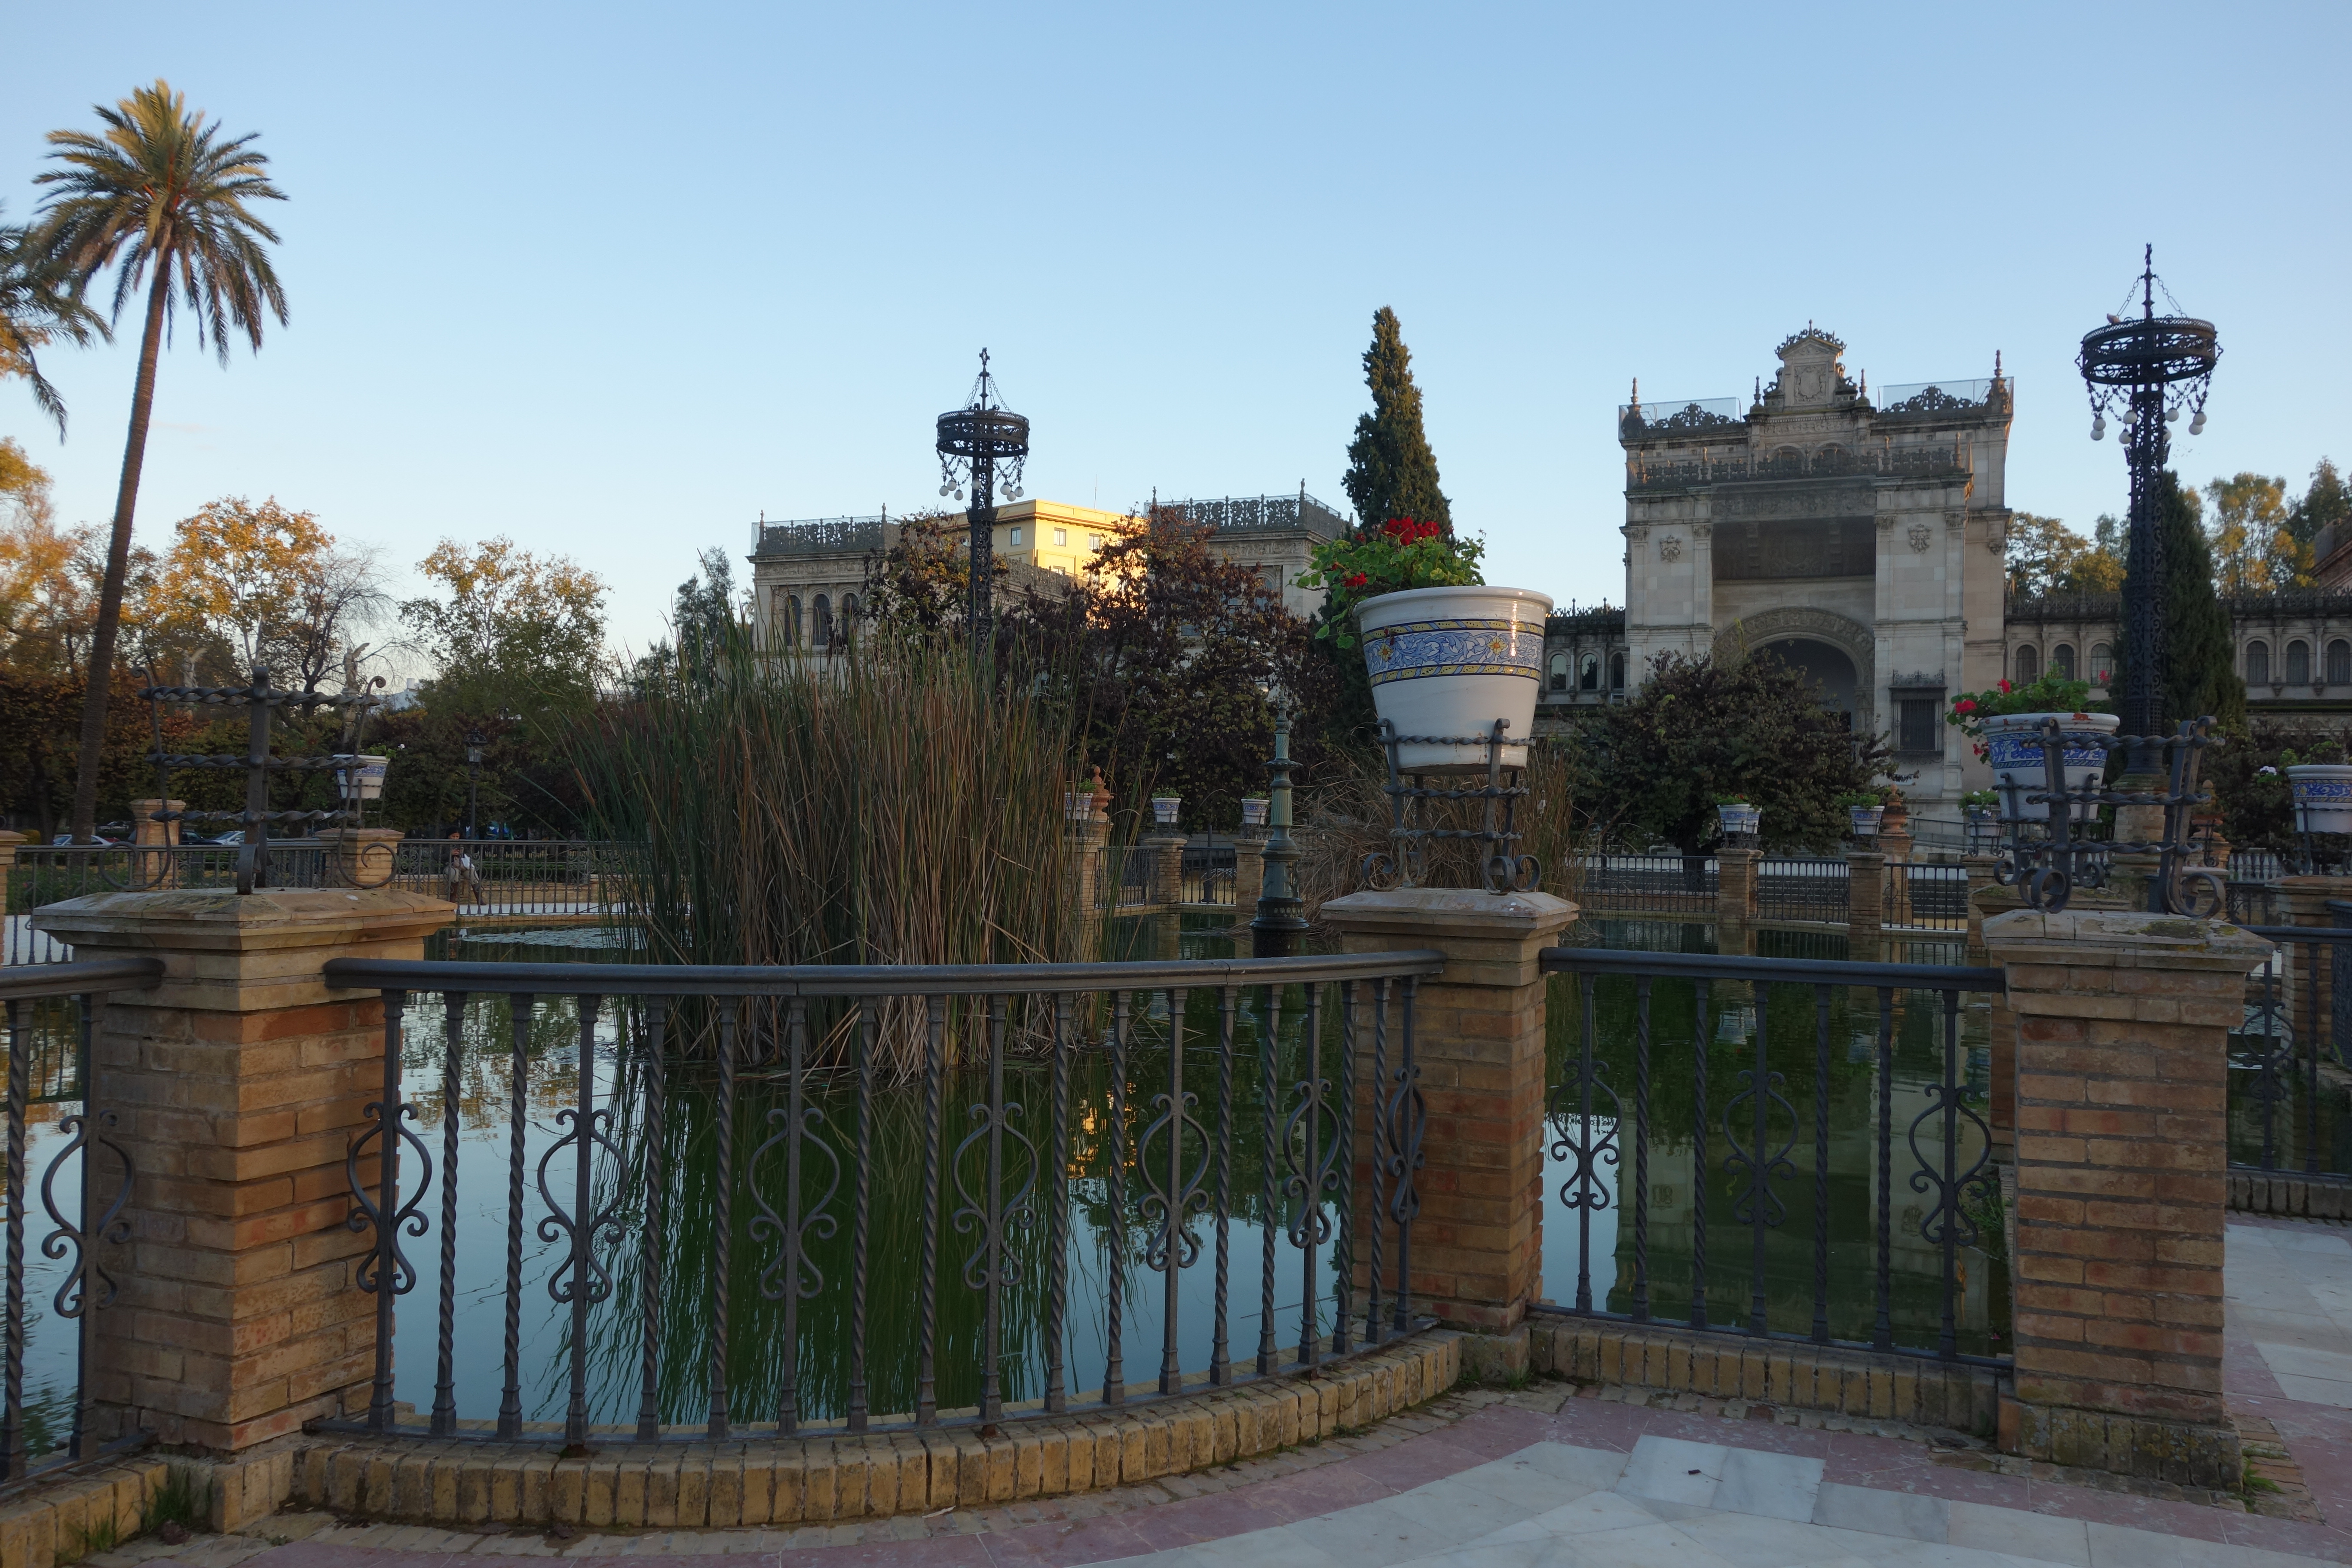 Bobbieness in Seville